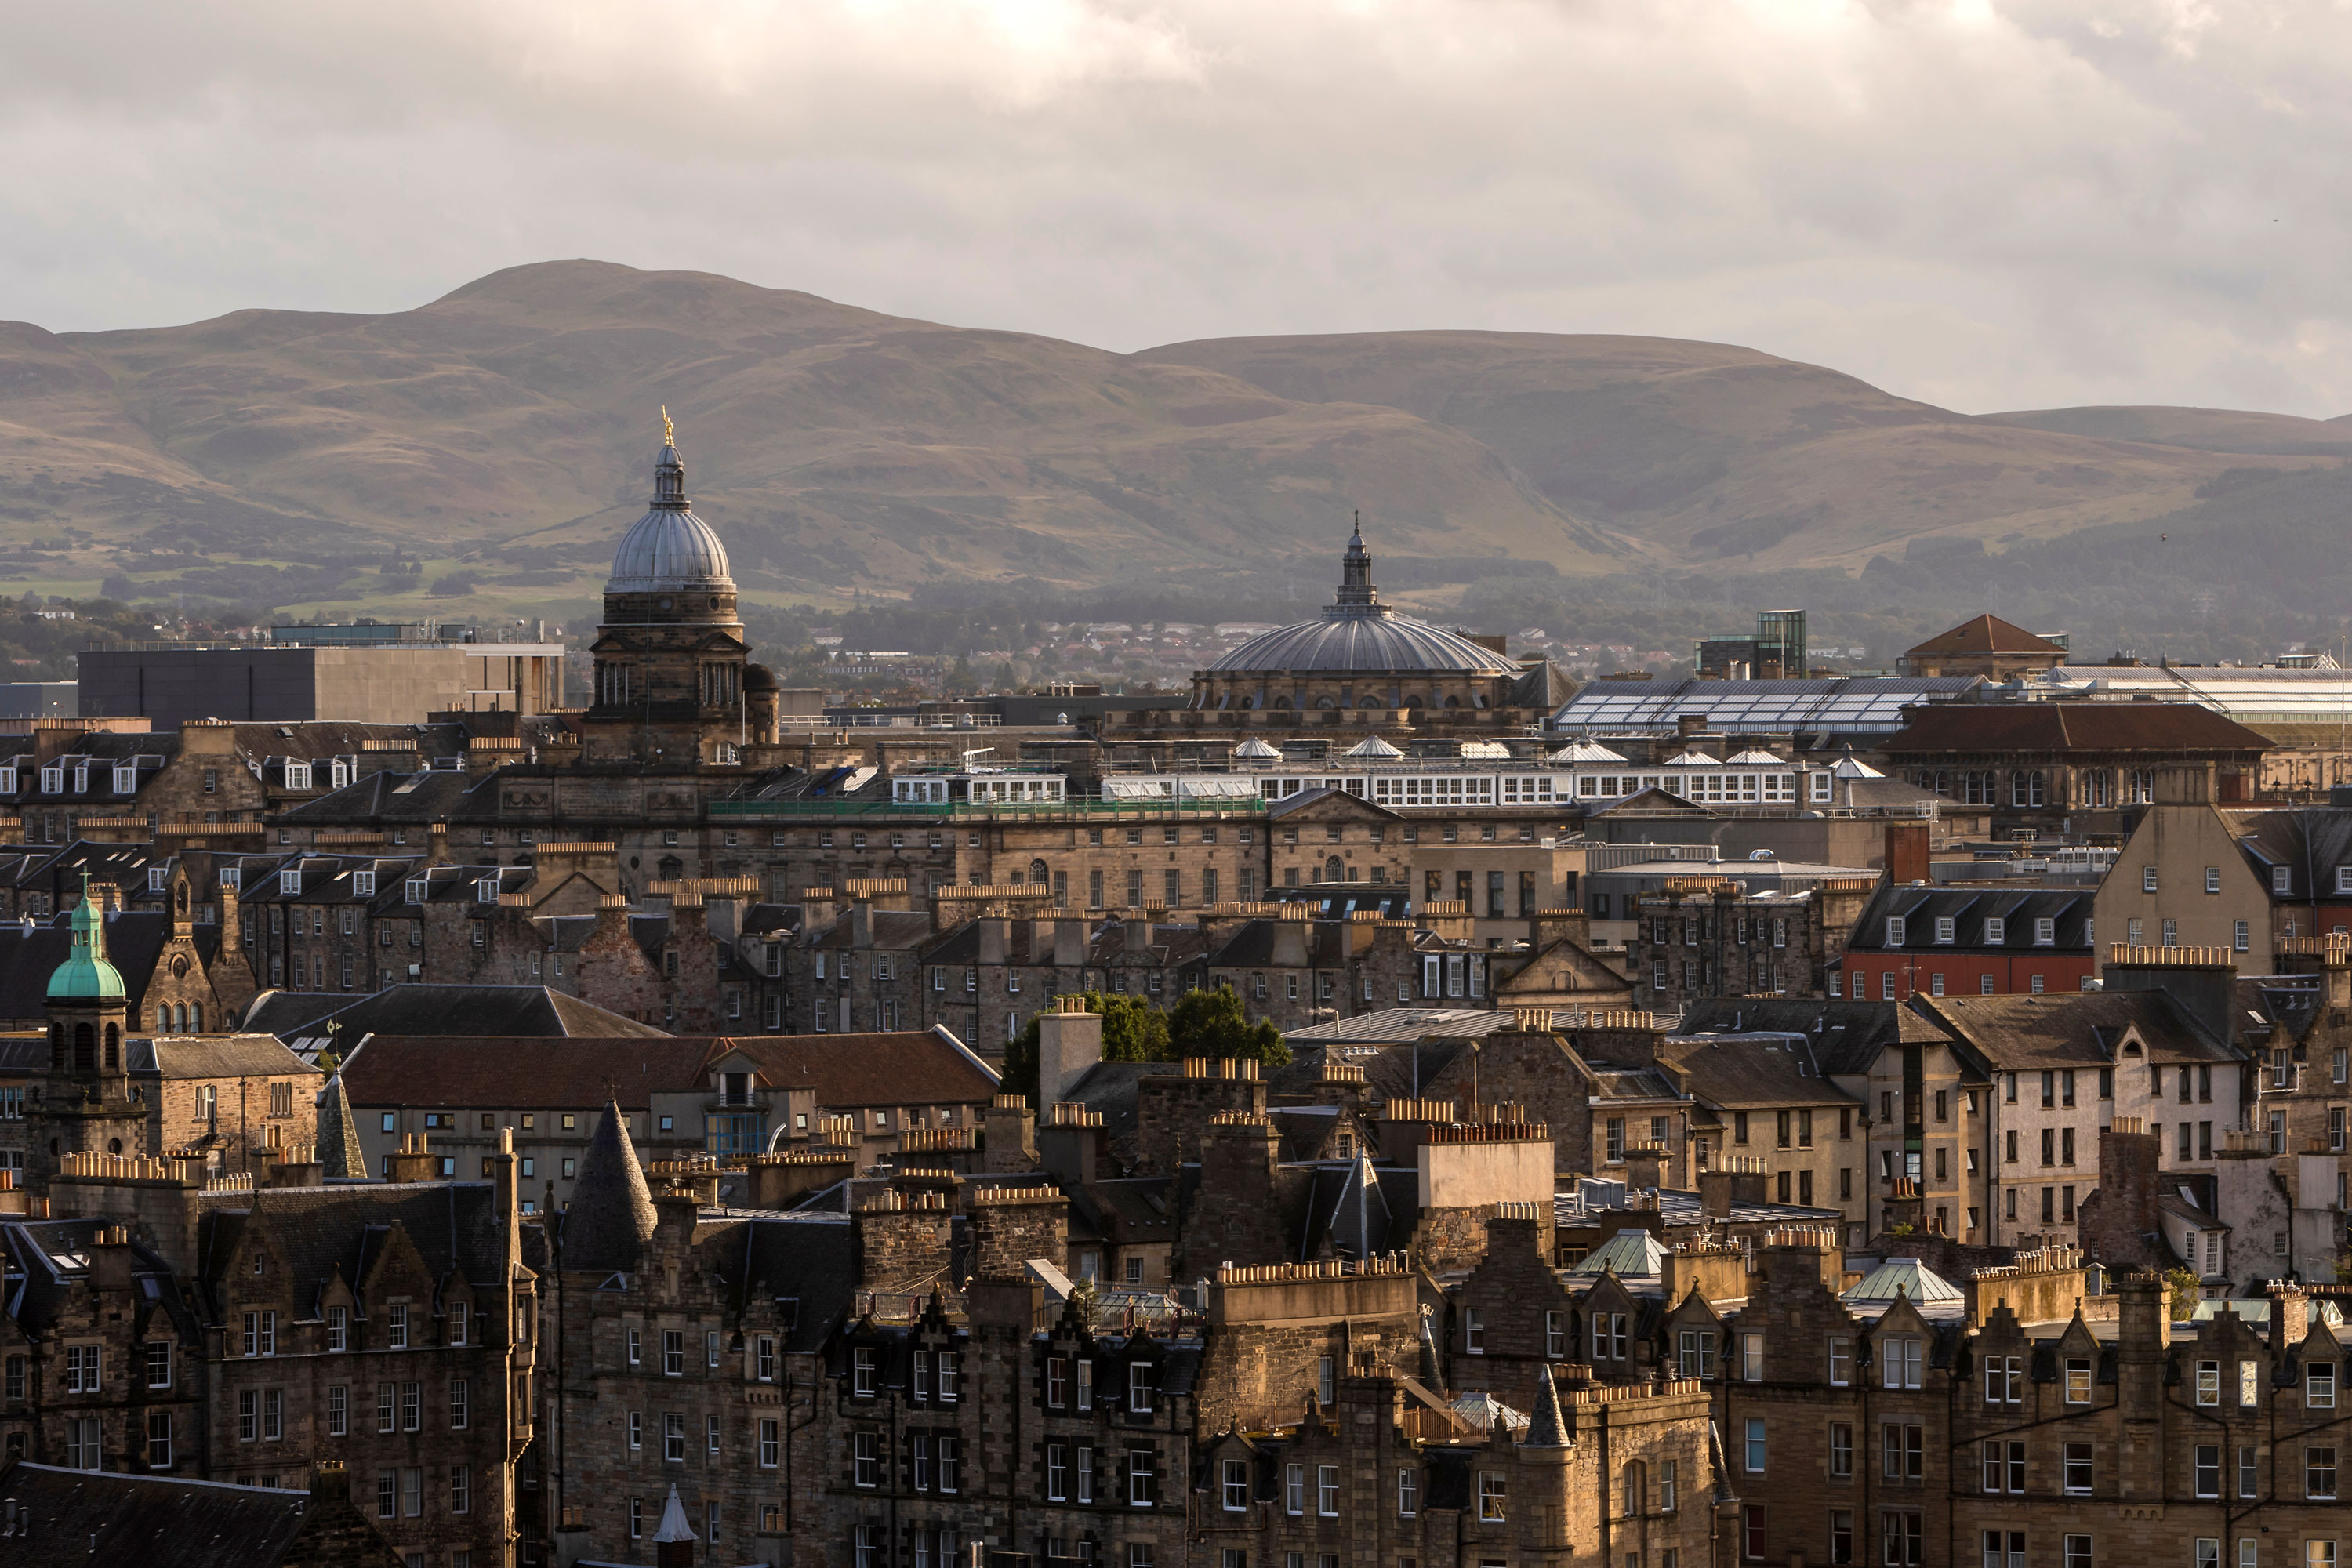 Scotland's capital city, Edinburgh